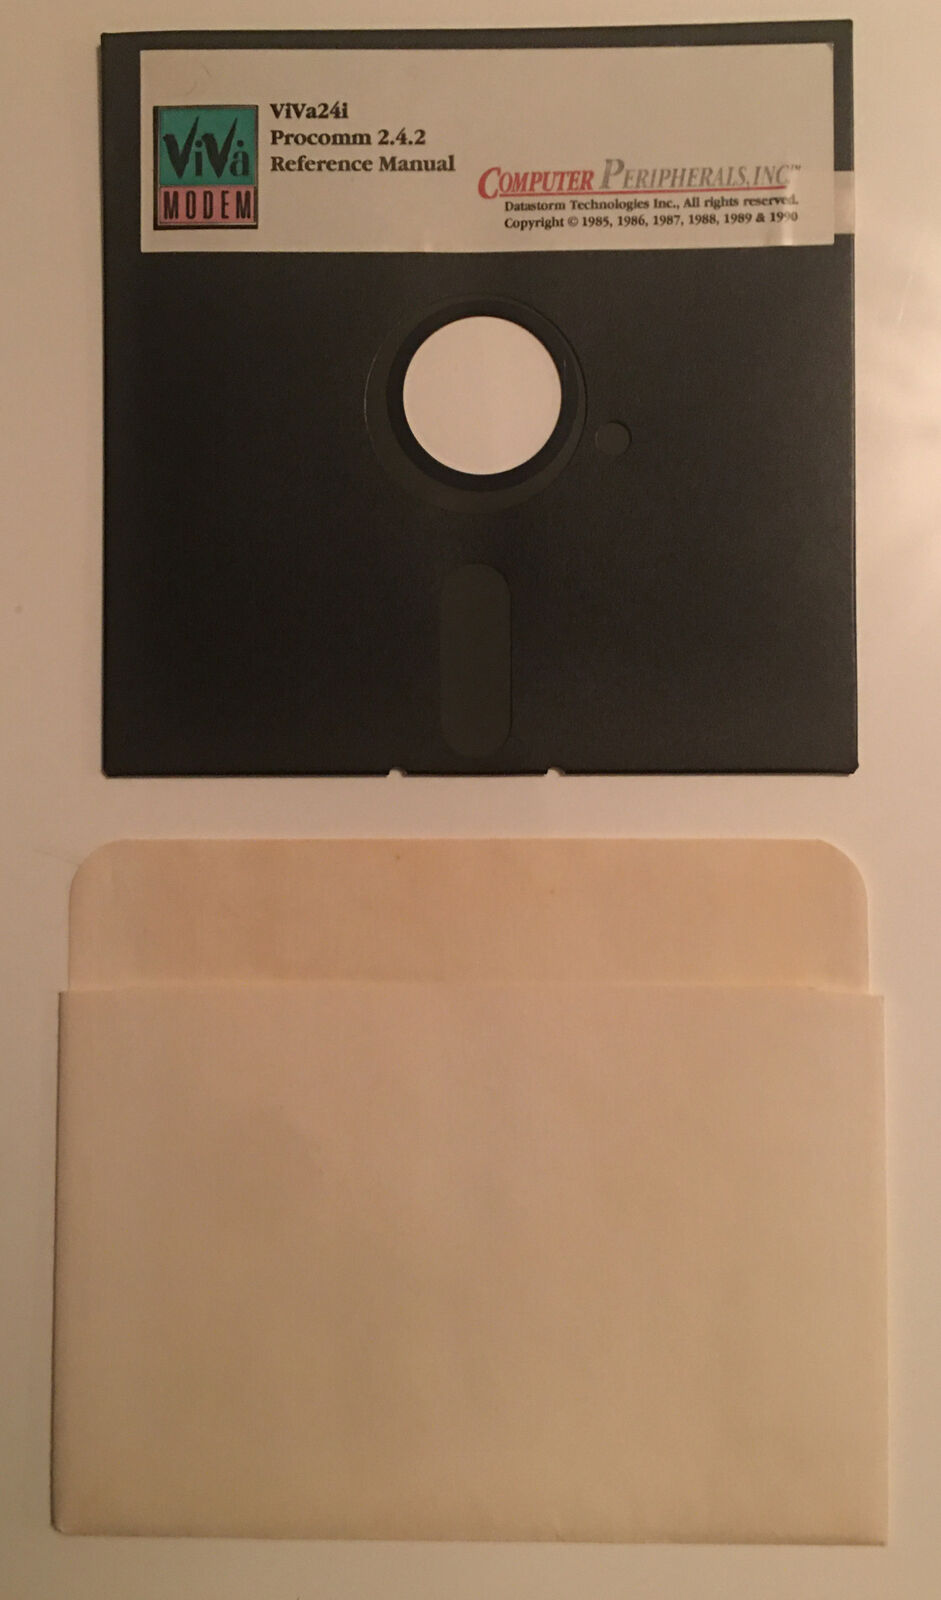 Viva Modem ViVa24i Procomm Reference Manual 5.5” Floppy Disk